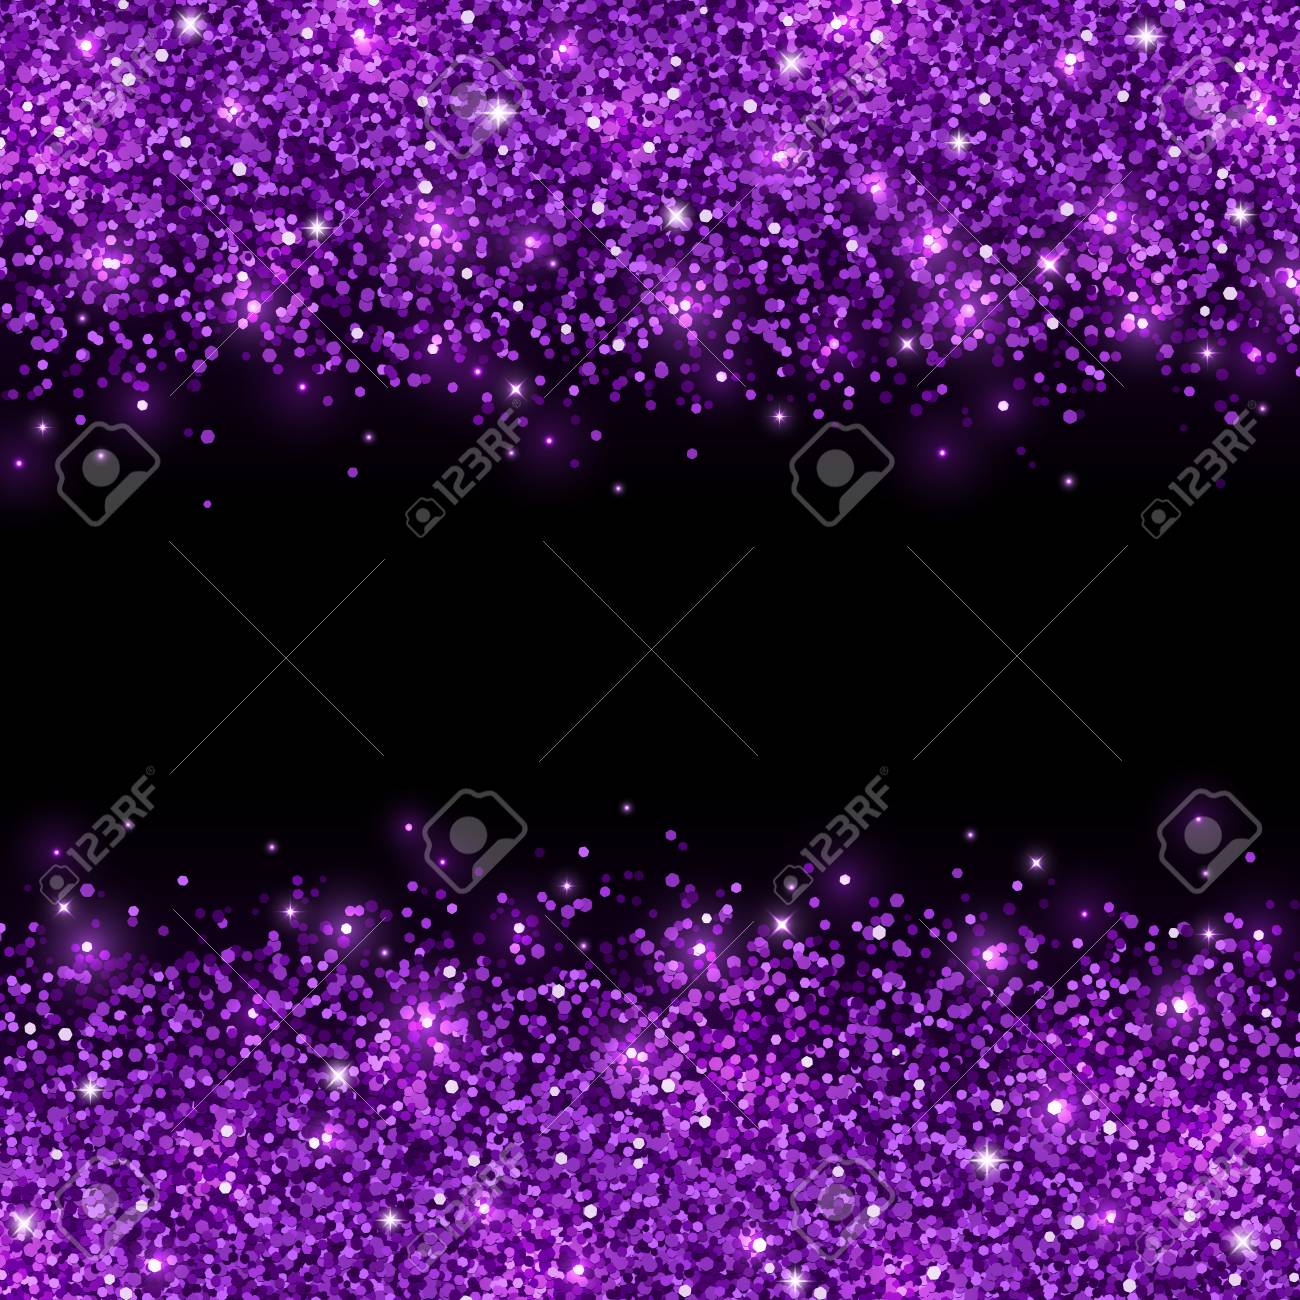 Purple Glitter Scattered On Black Background Vector Royalty